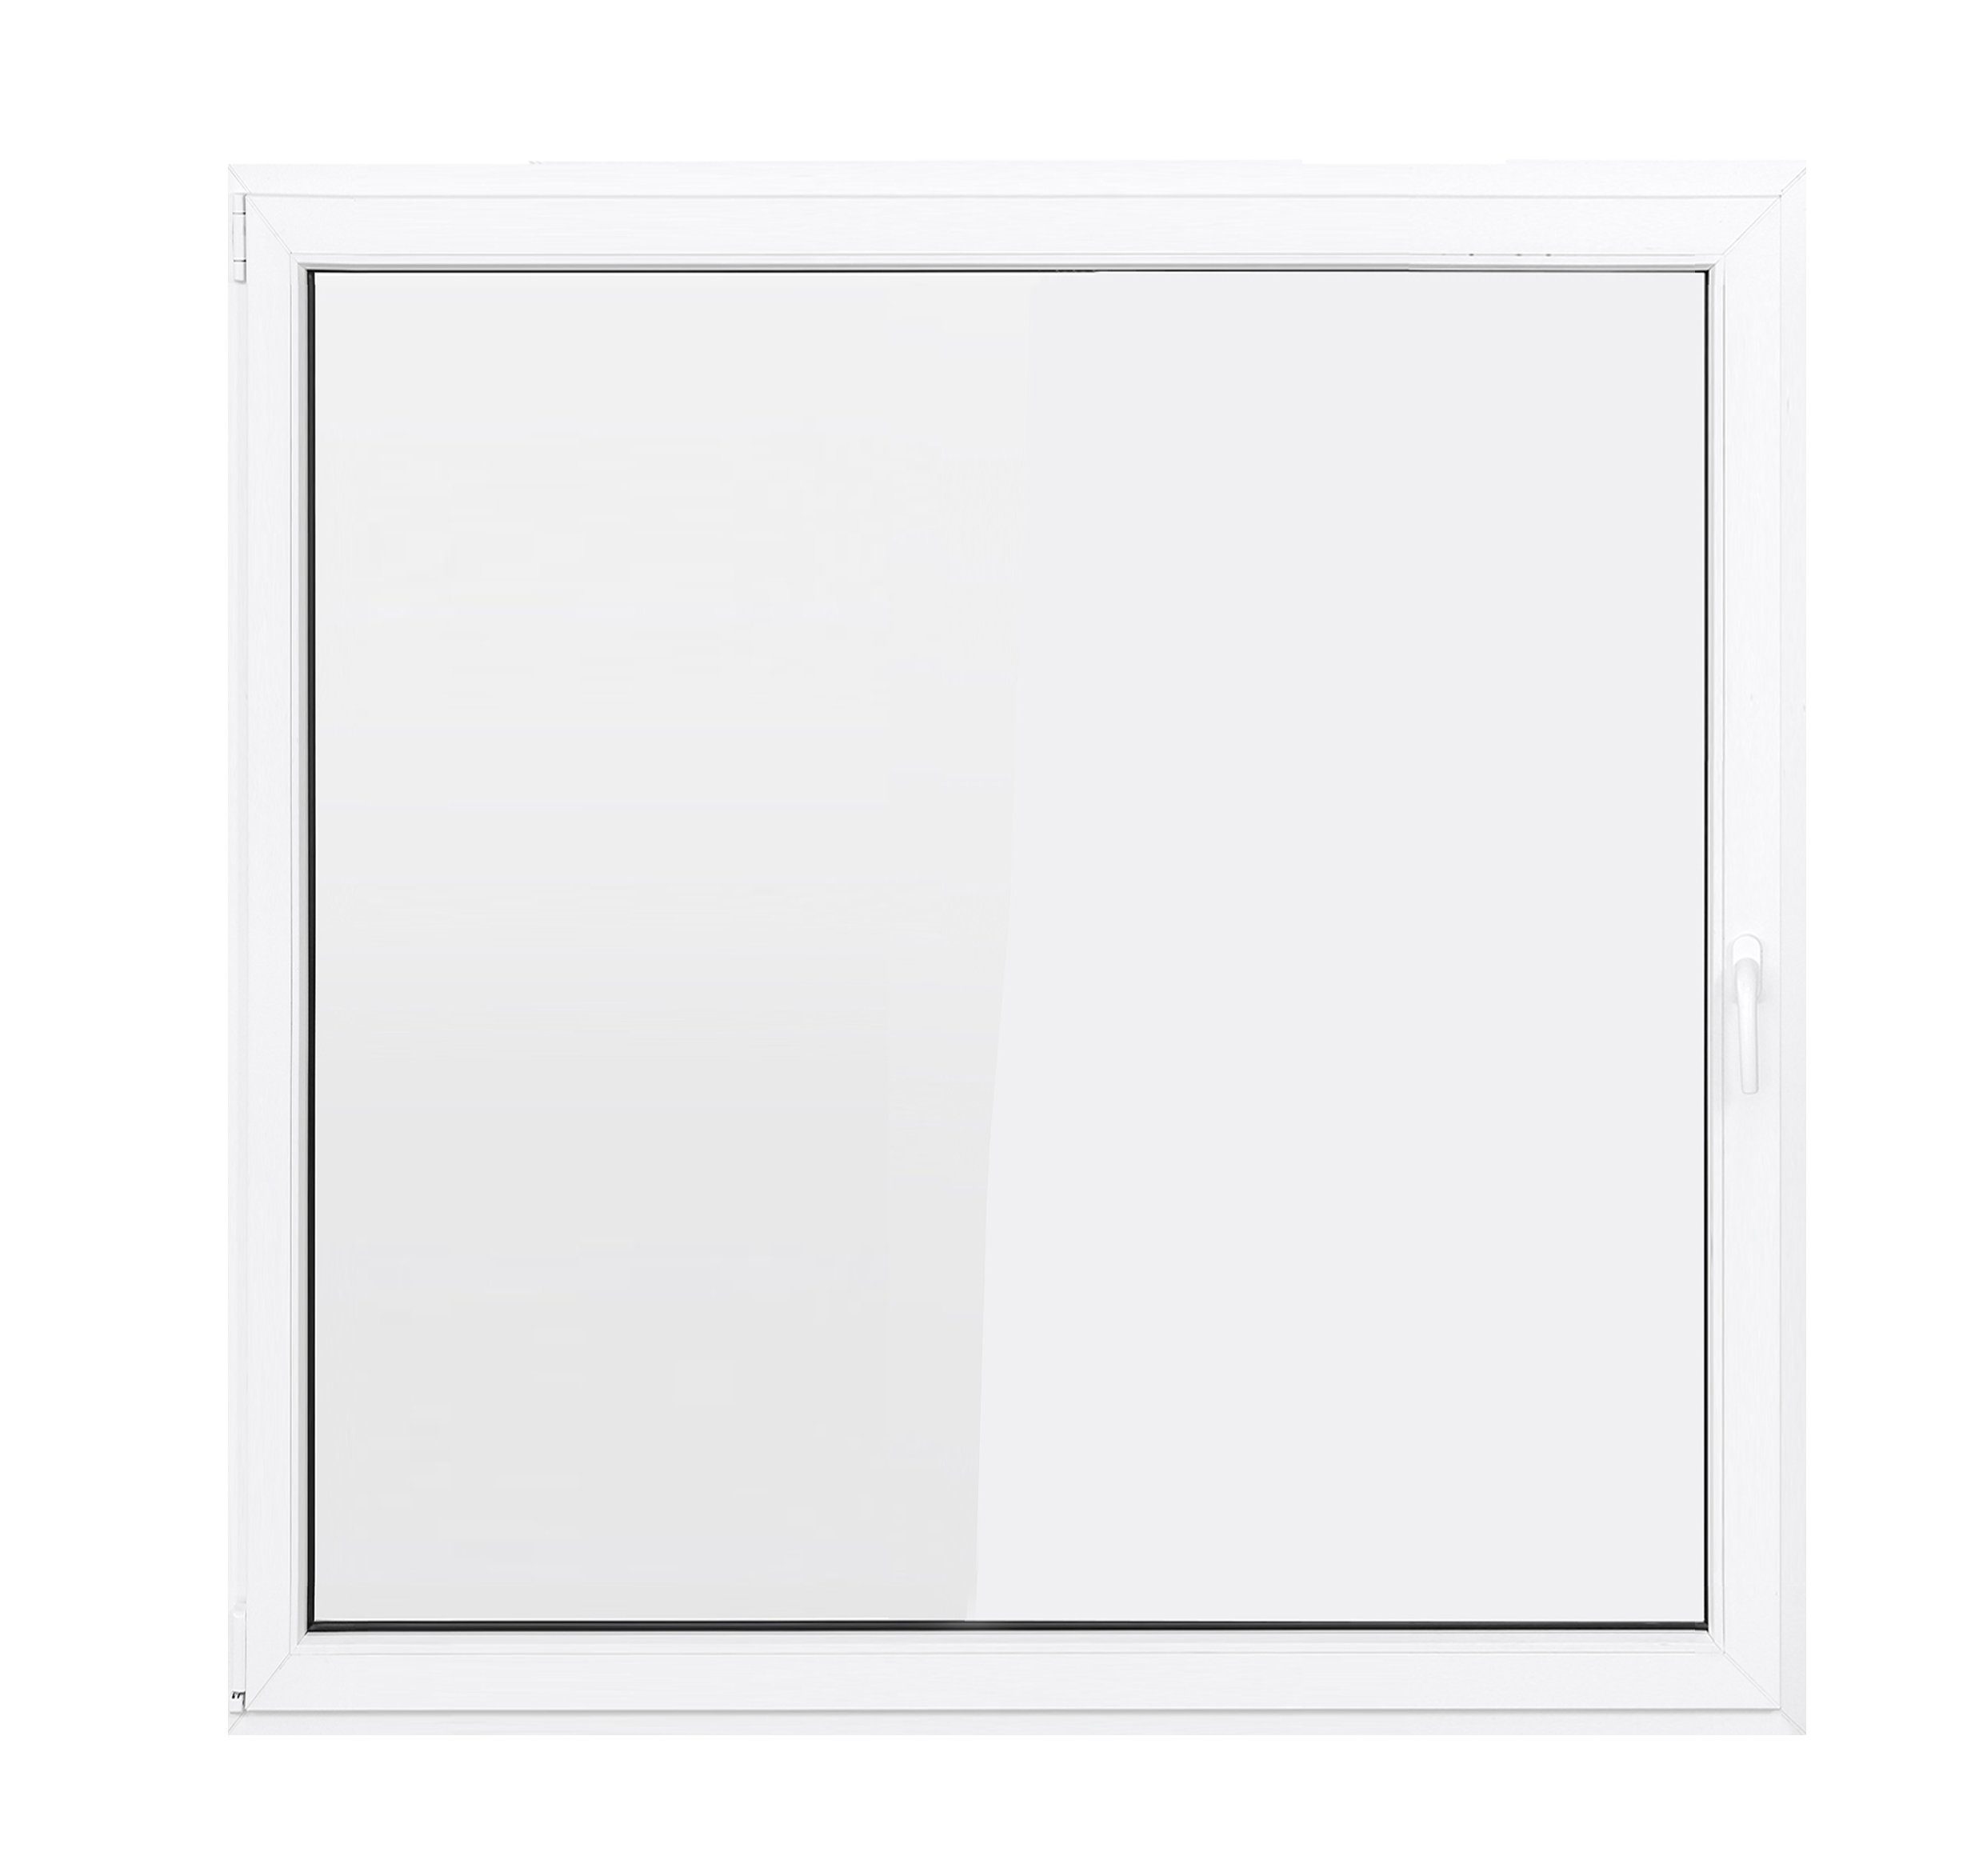 SN DECO GROUP Kellerfenster 1 Dreh-Kipp mm Hochwertiges RC2 weiß Verglasung 5-Kammer-Profil Profil, 70 Sicherheitsbeschlag, Flügel 1000x1000 (Set), 2-fach